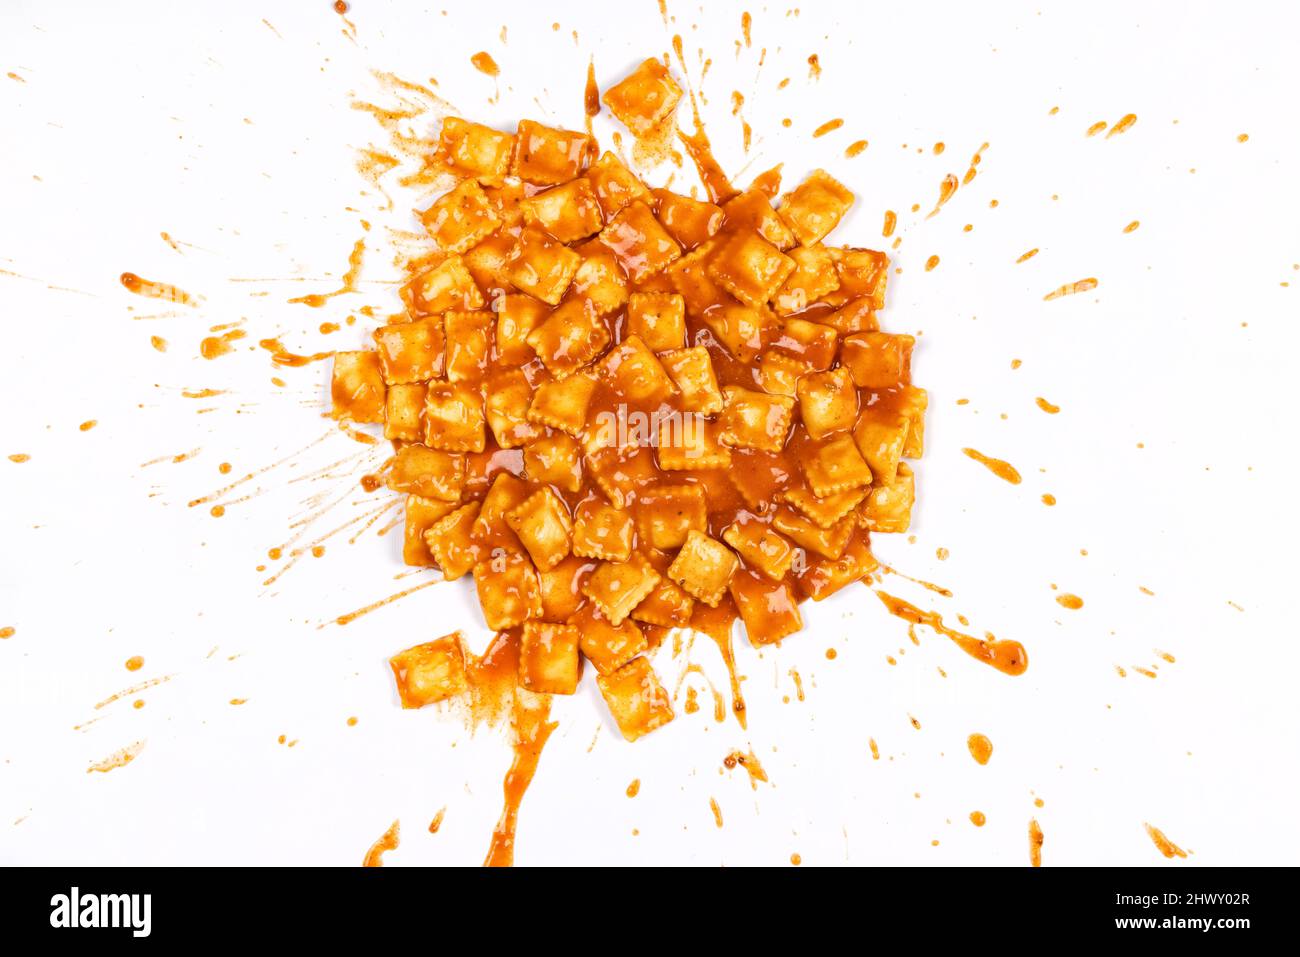 Ravioli in tomato sauce splattered on a white background. Stock Photo